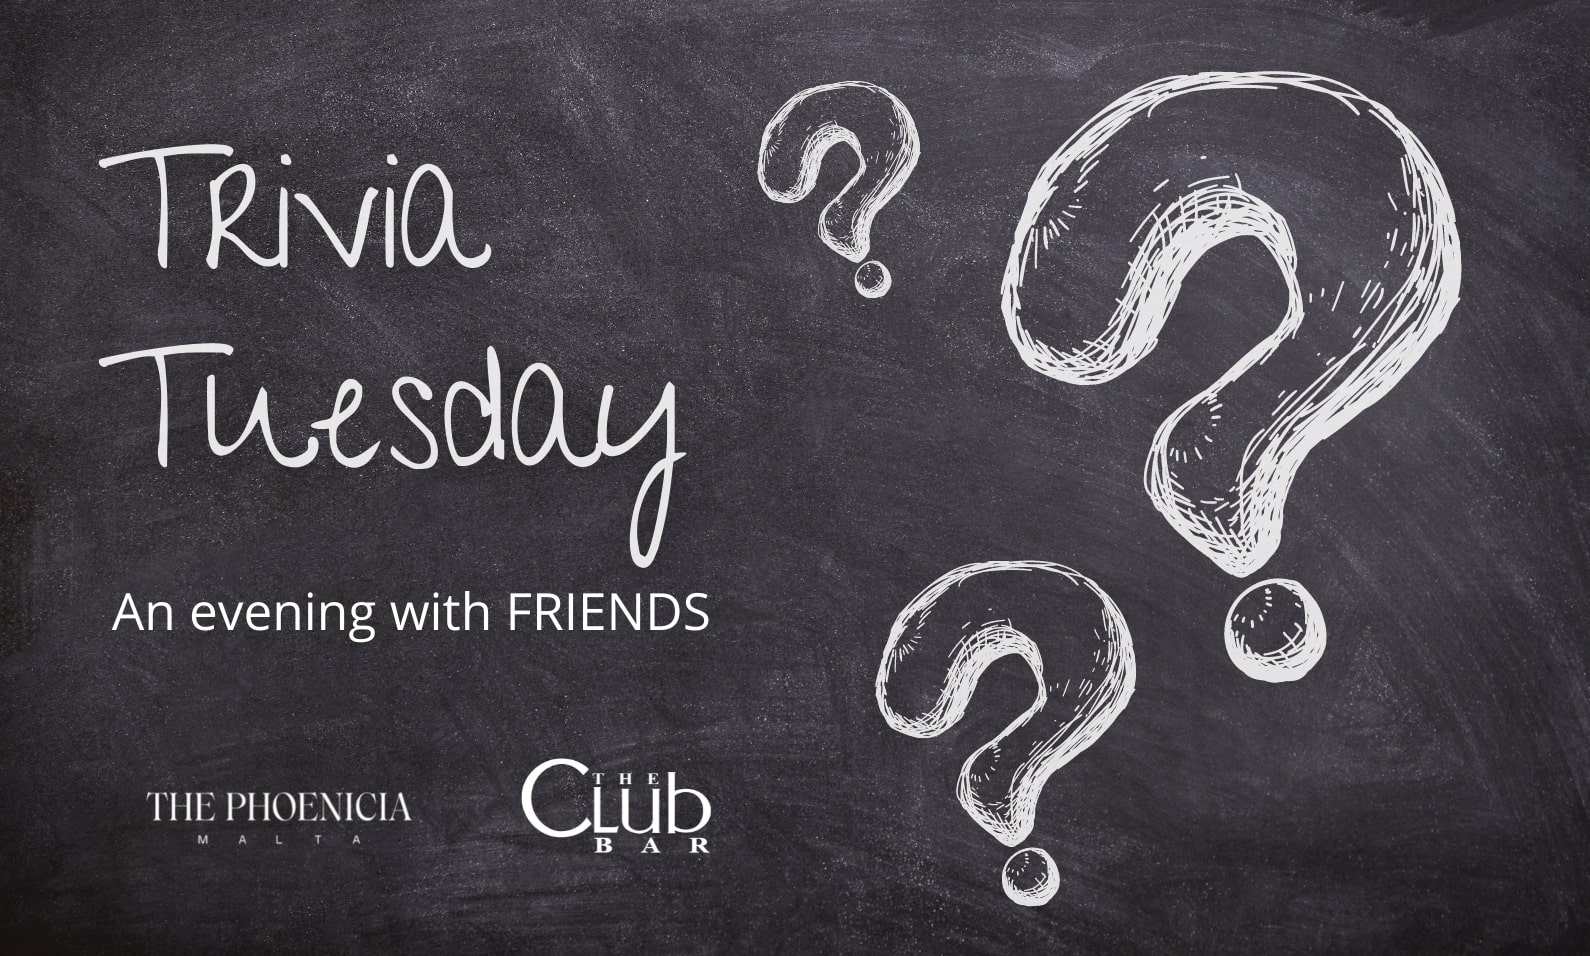 Trivia Tuesday at The Club Bar - The Phoenicia Malta